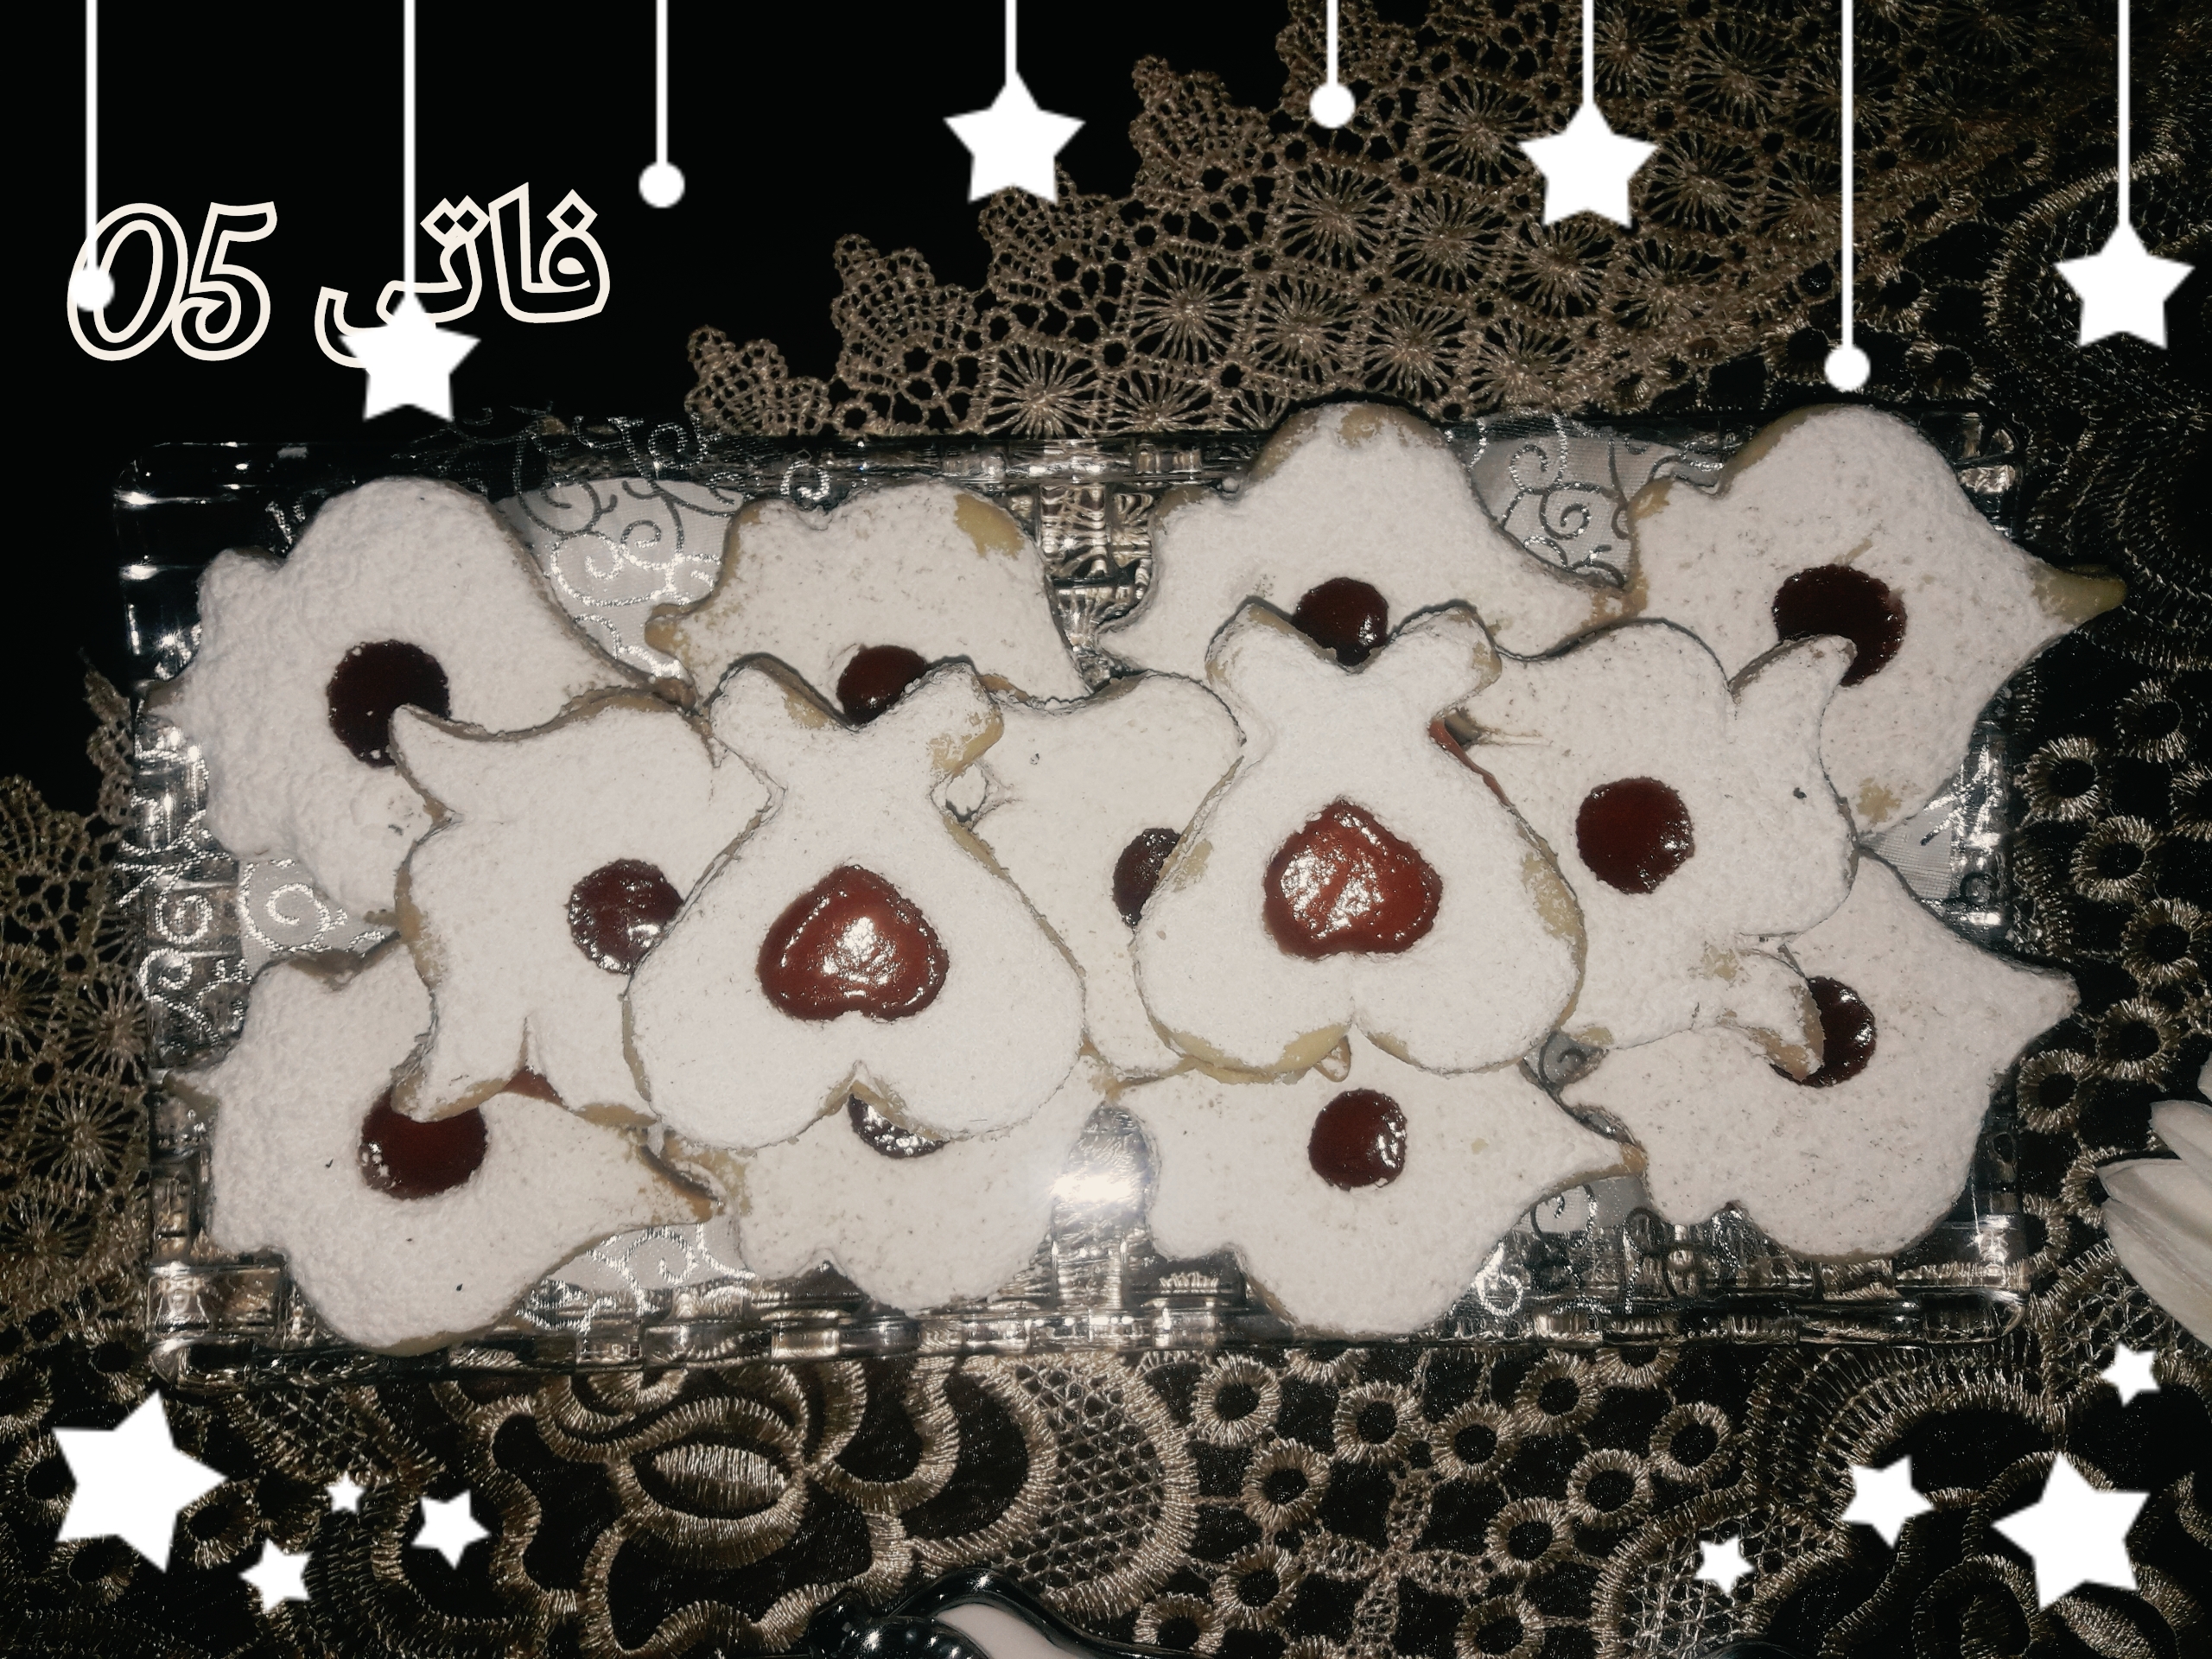 حلوياتي للعيد أختكم  فاتي 05 P_89739s1m1